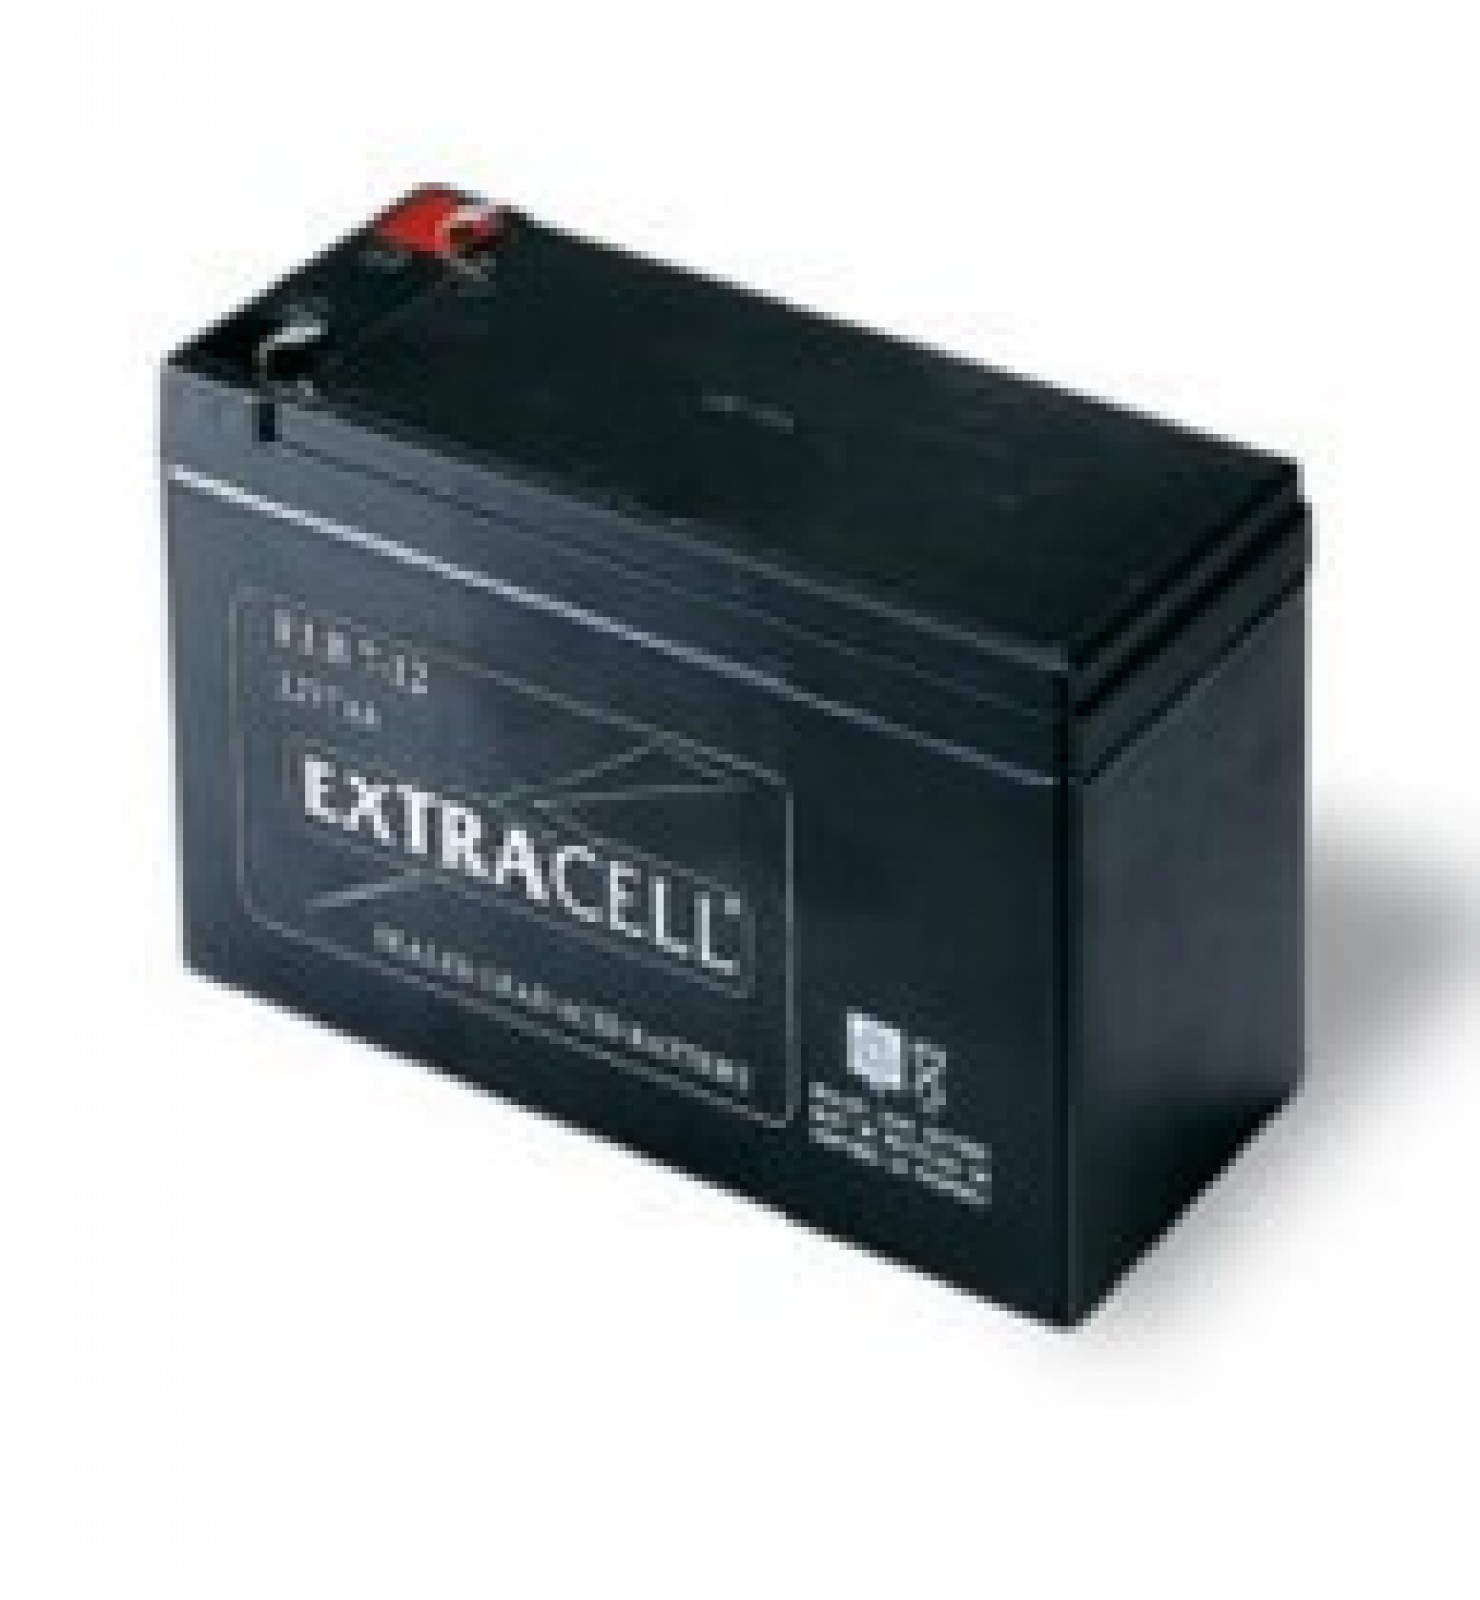 NICE B12-B.4310 аккумуляторная батарея